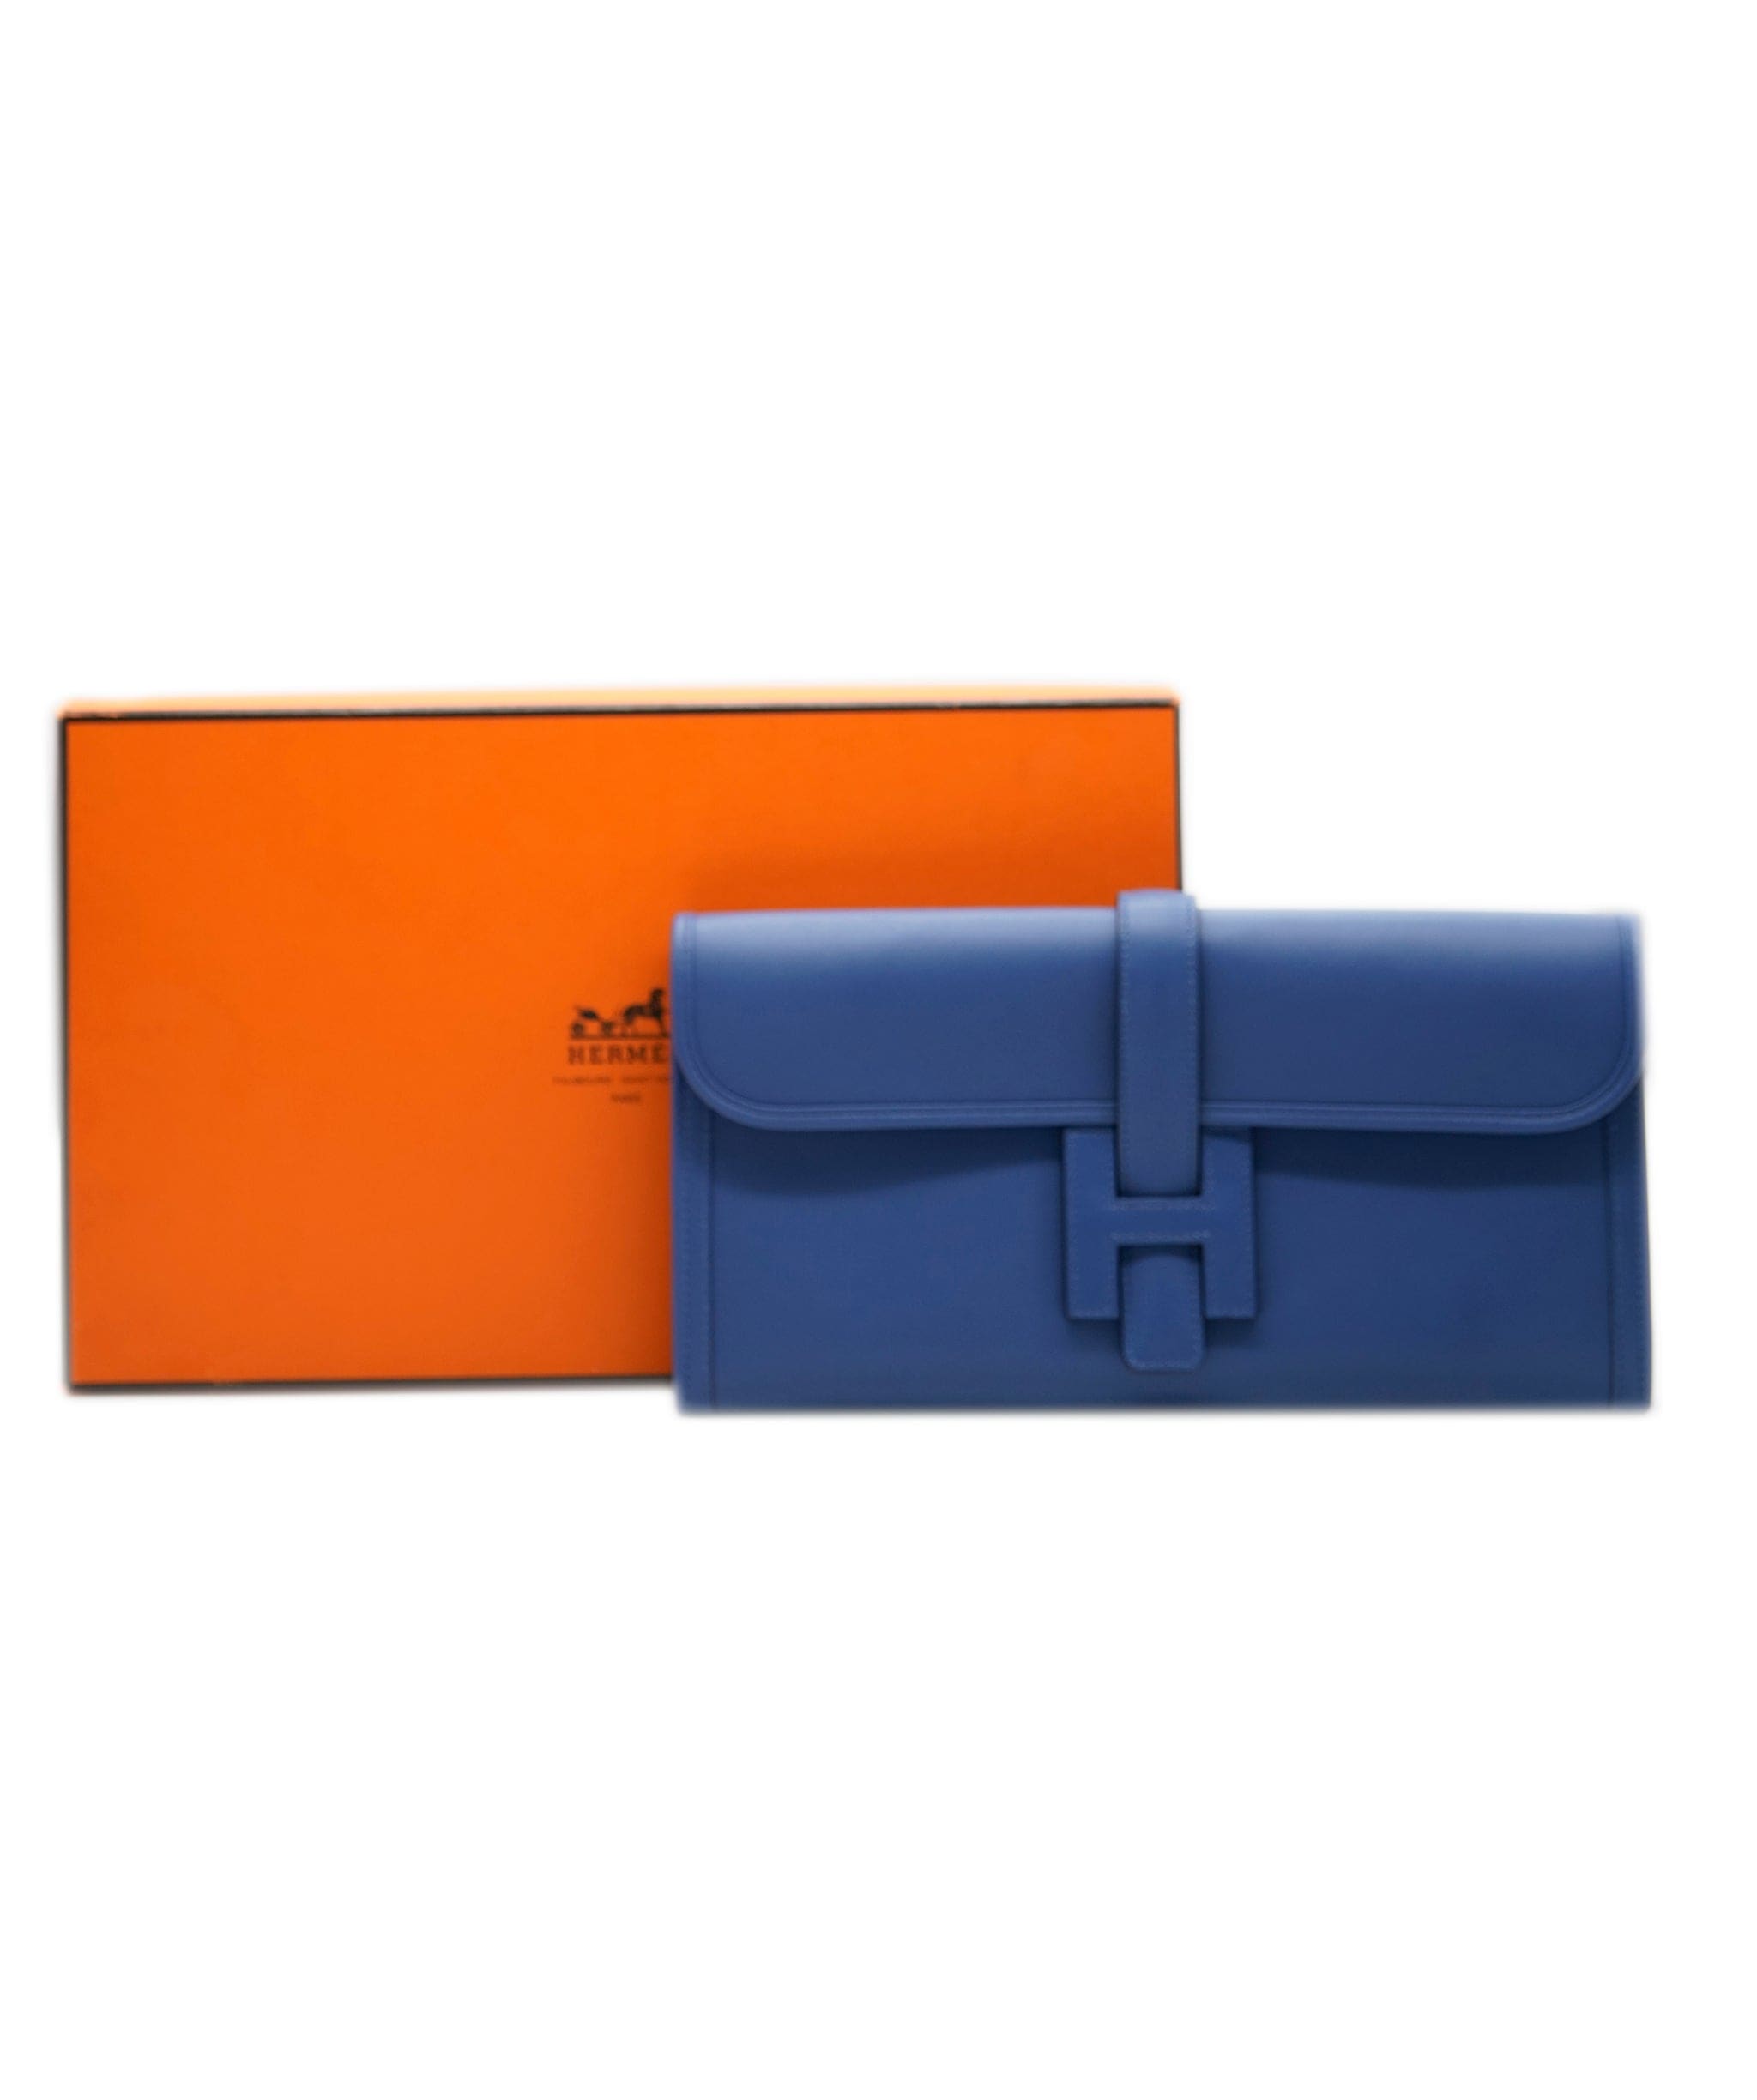 Hermès Hermes jige clutch blue brighton  AVC1541